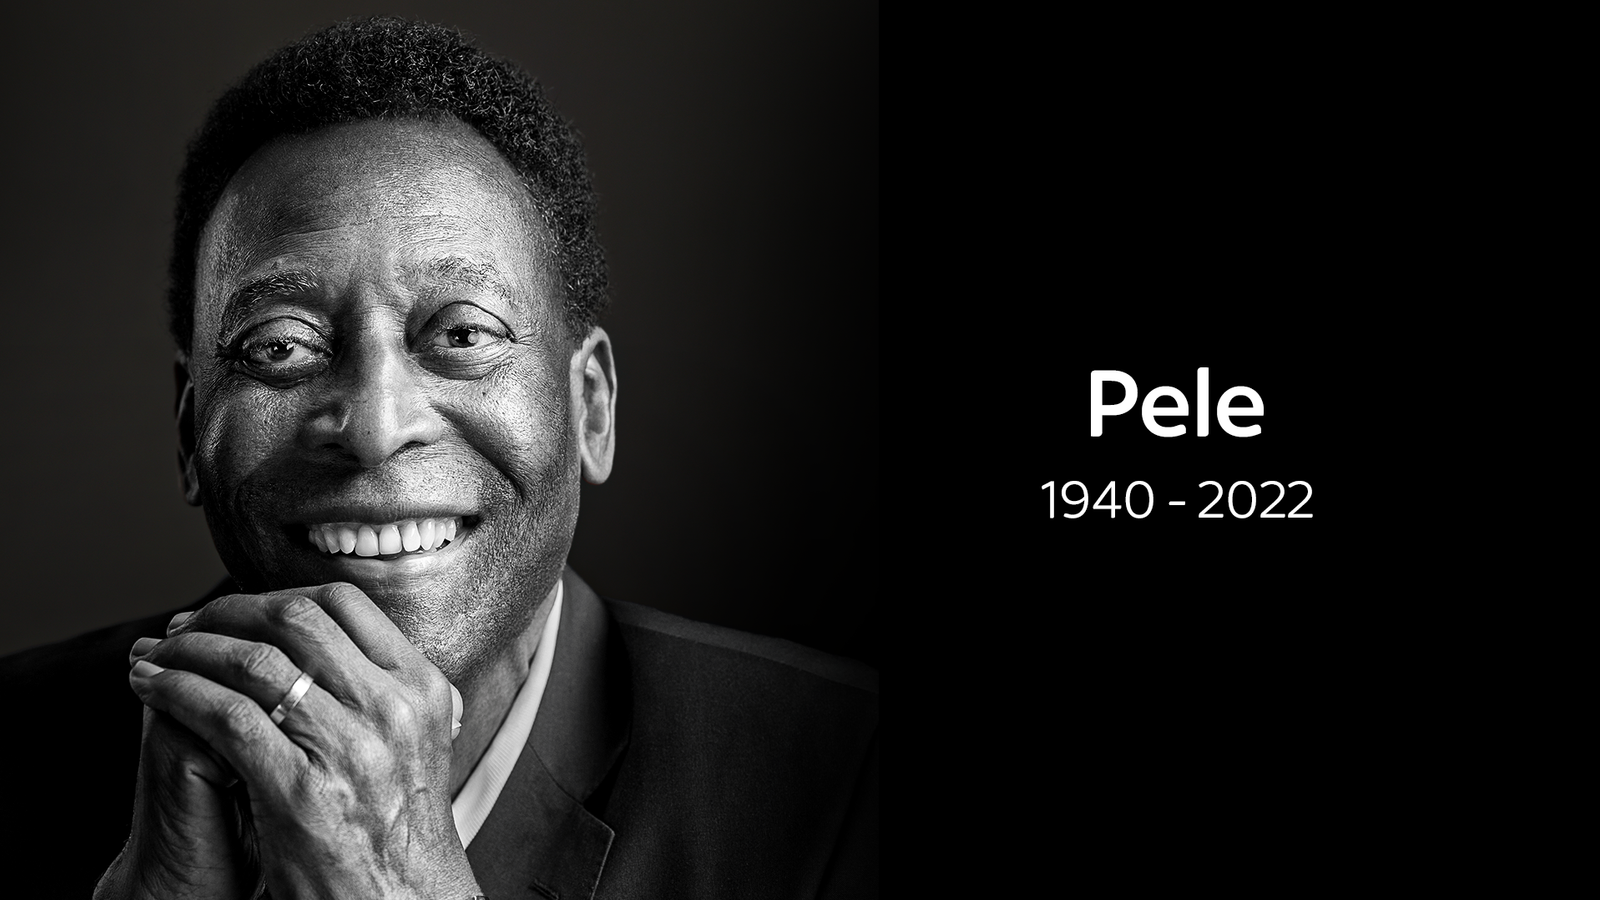 Pele: Brazil legend dies aged 82 after battle with cancer